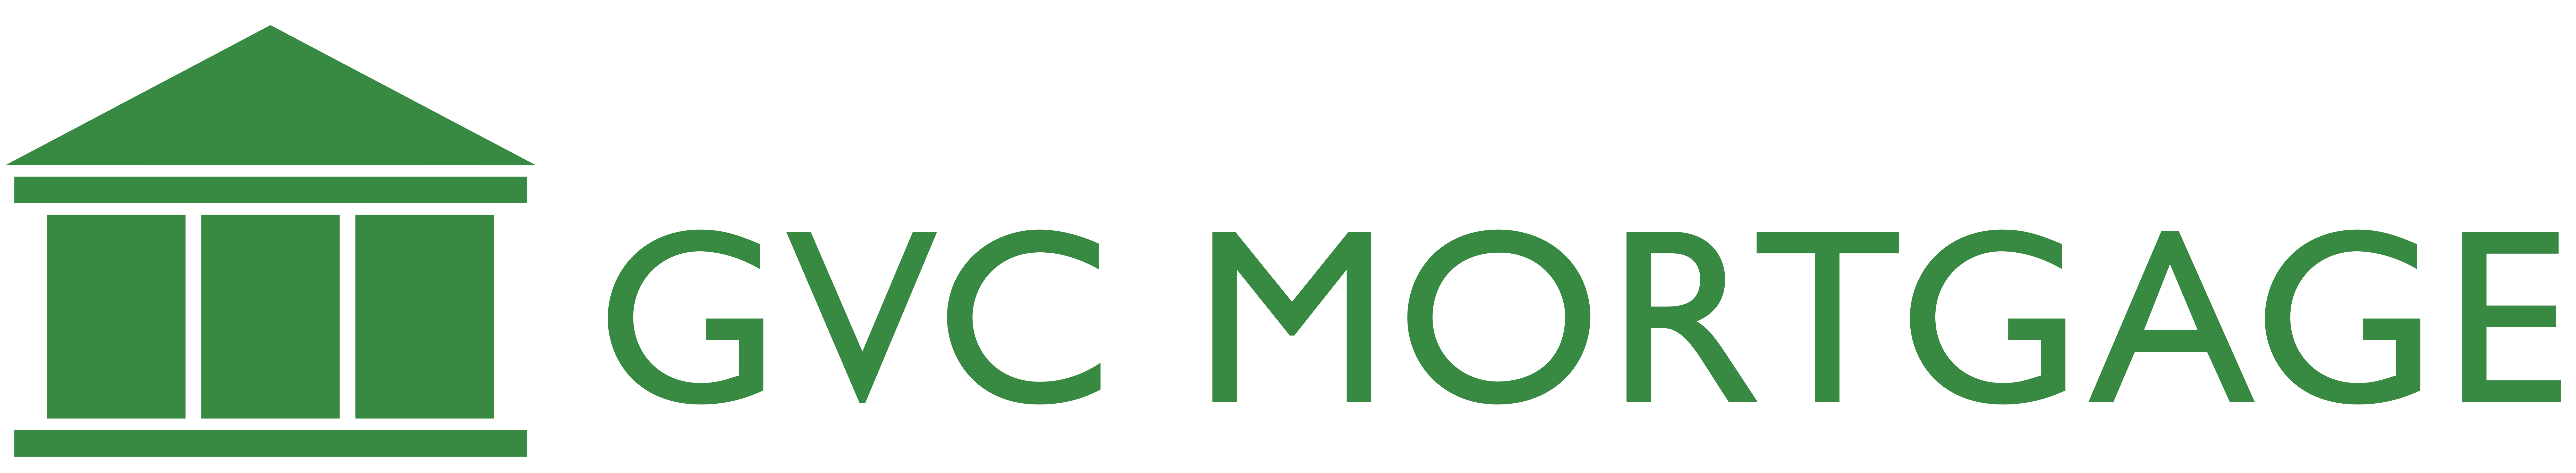 GVC Mortgage, Inc. Company Logo